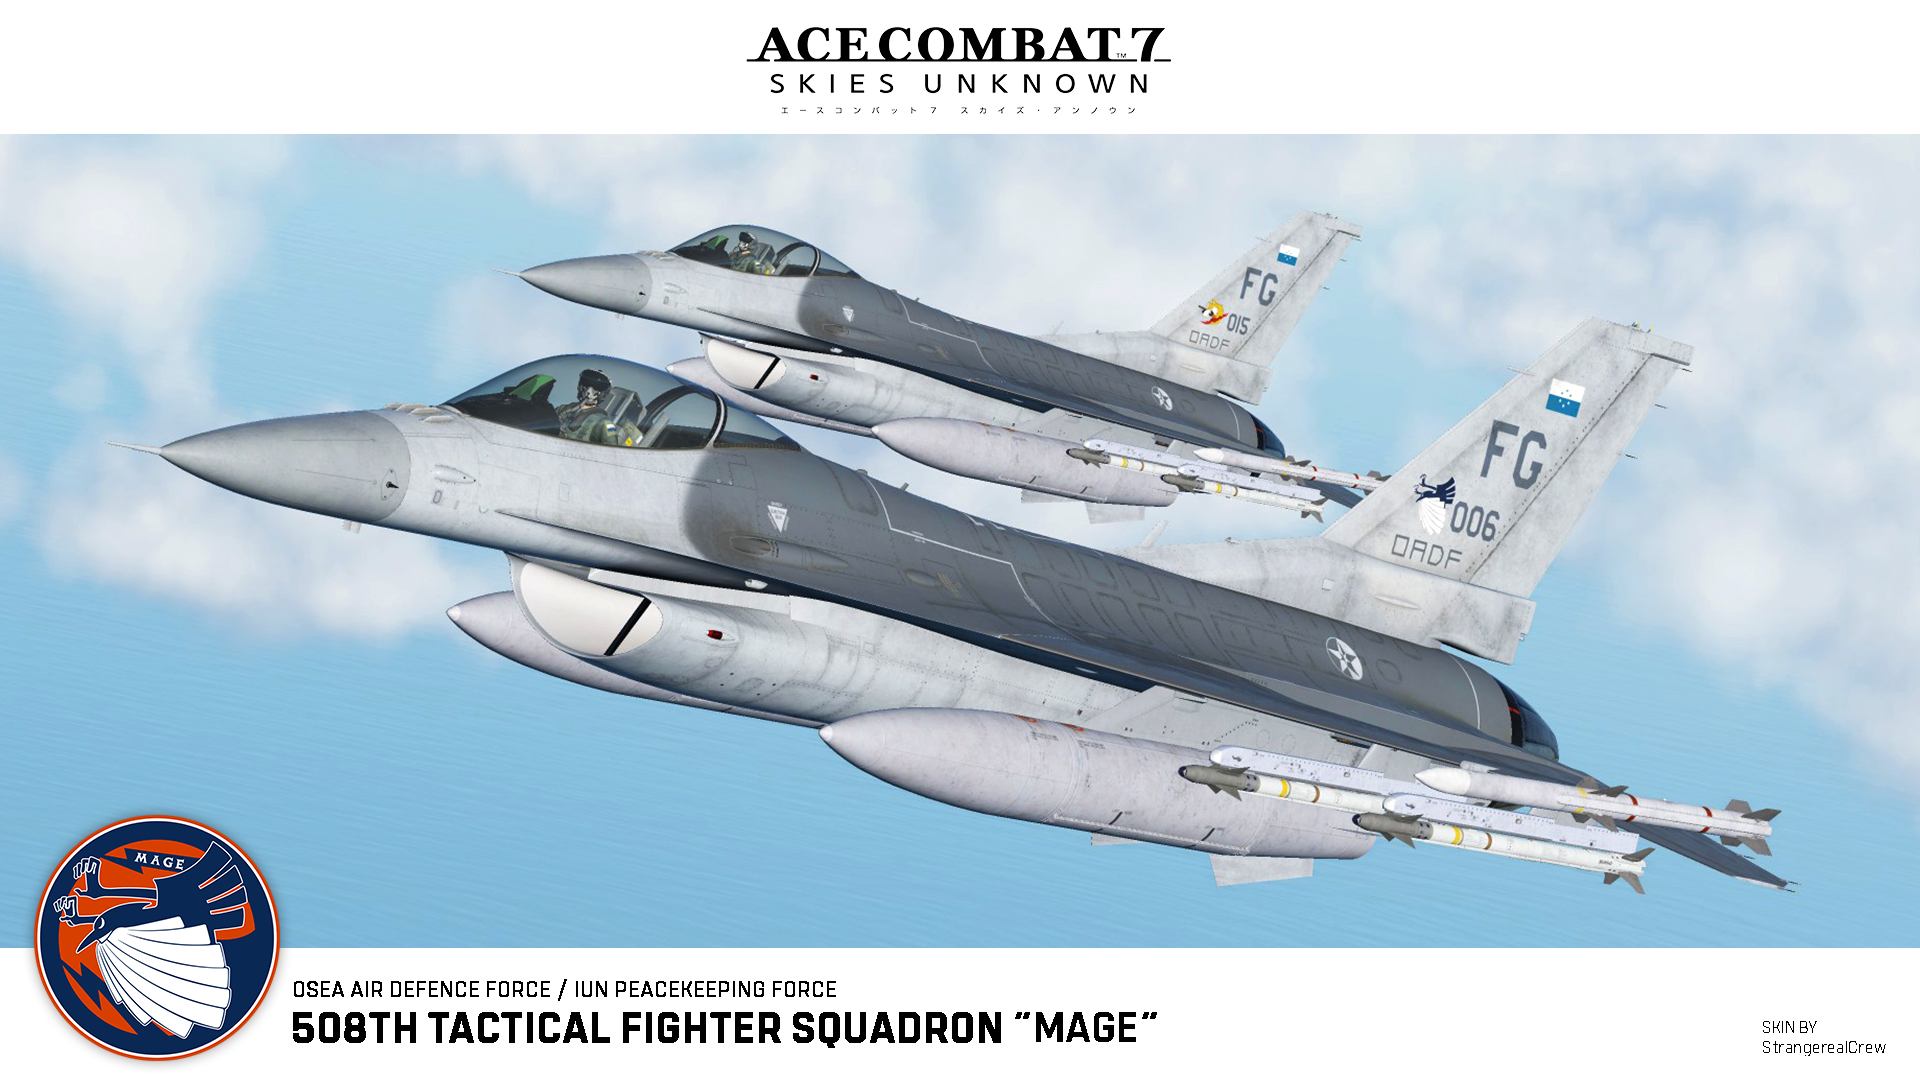 Ace Combat - F-16C Fighting Falcon OADF 508th Tactical Fighter Squadron "Mage Squadron"